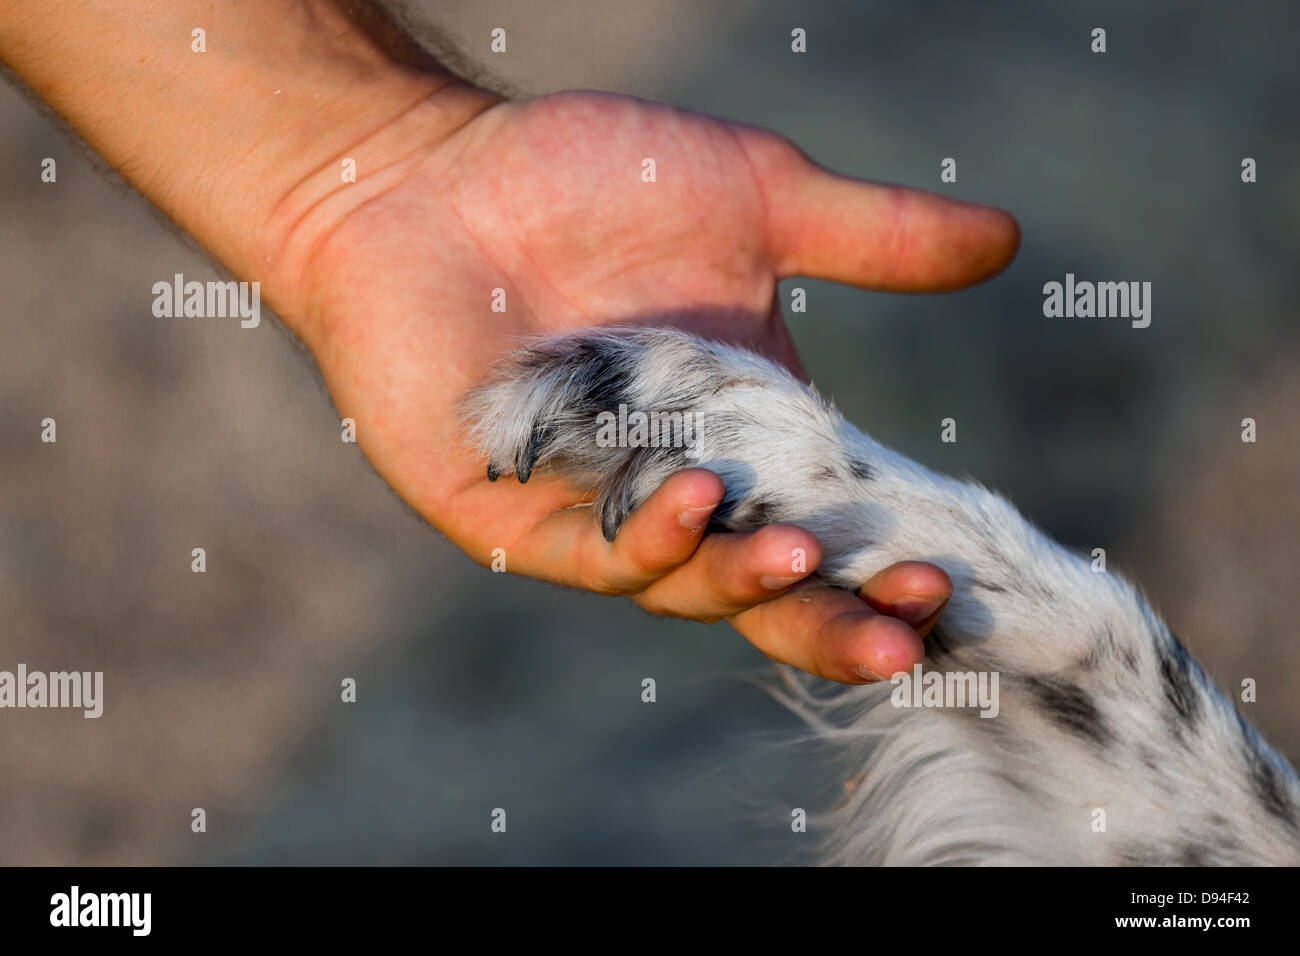 Dog paw and human hand Stock Photo